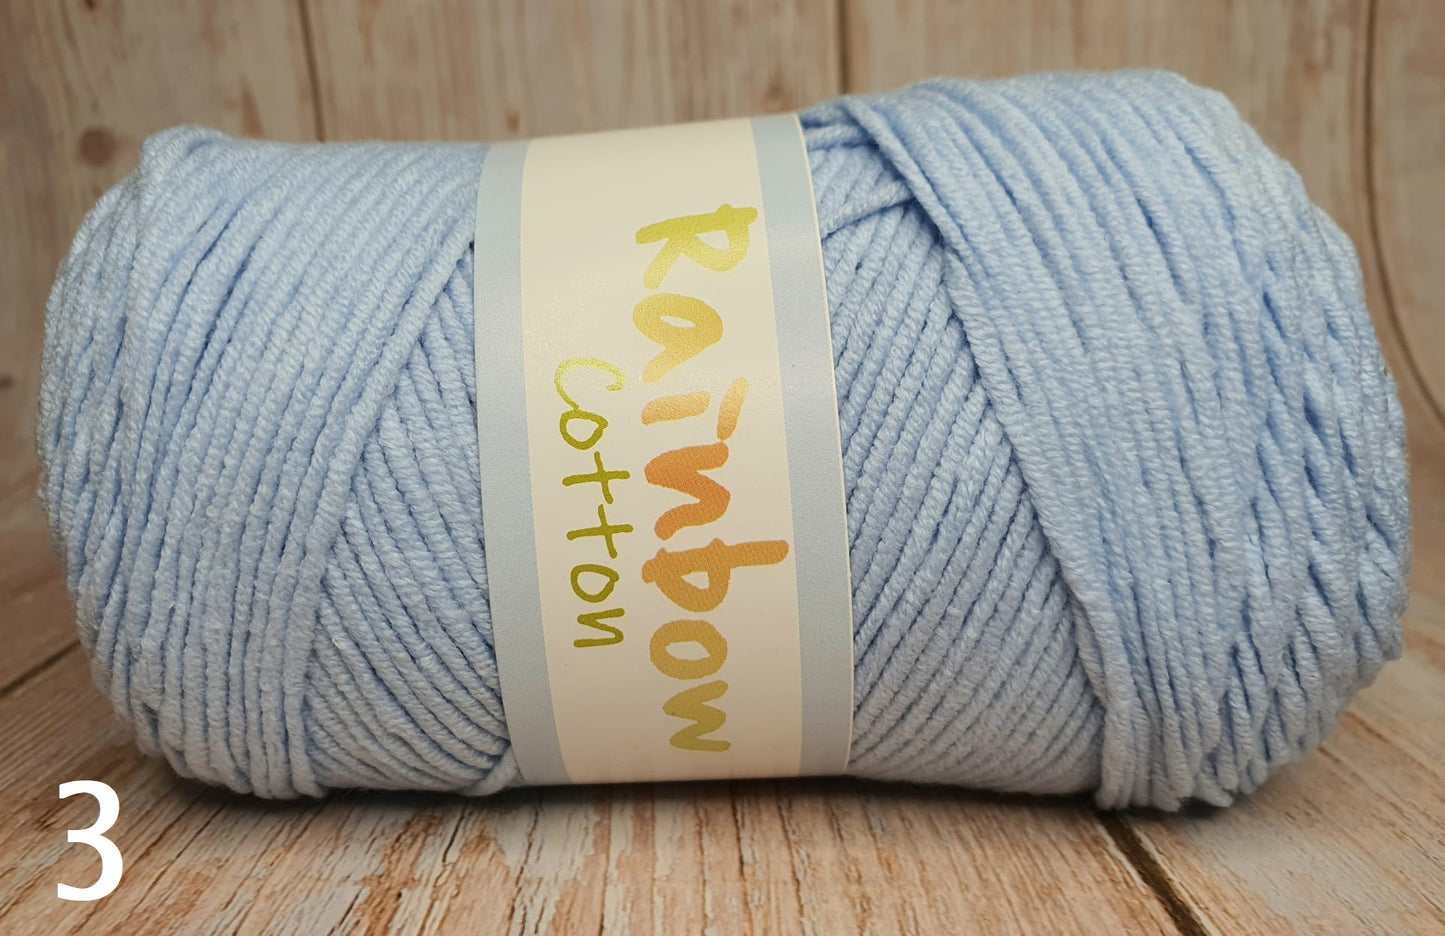 (Bulk Order Available) Rainbow Yarn Milk Cotton Yarn 5 ply Cake Gradient & Solid Color 100g